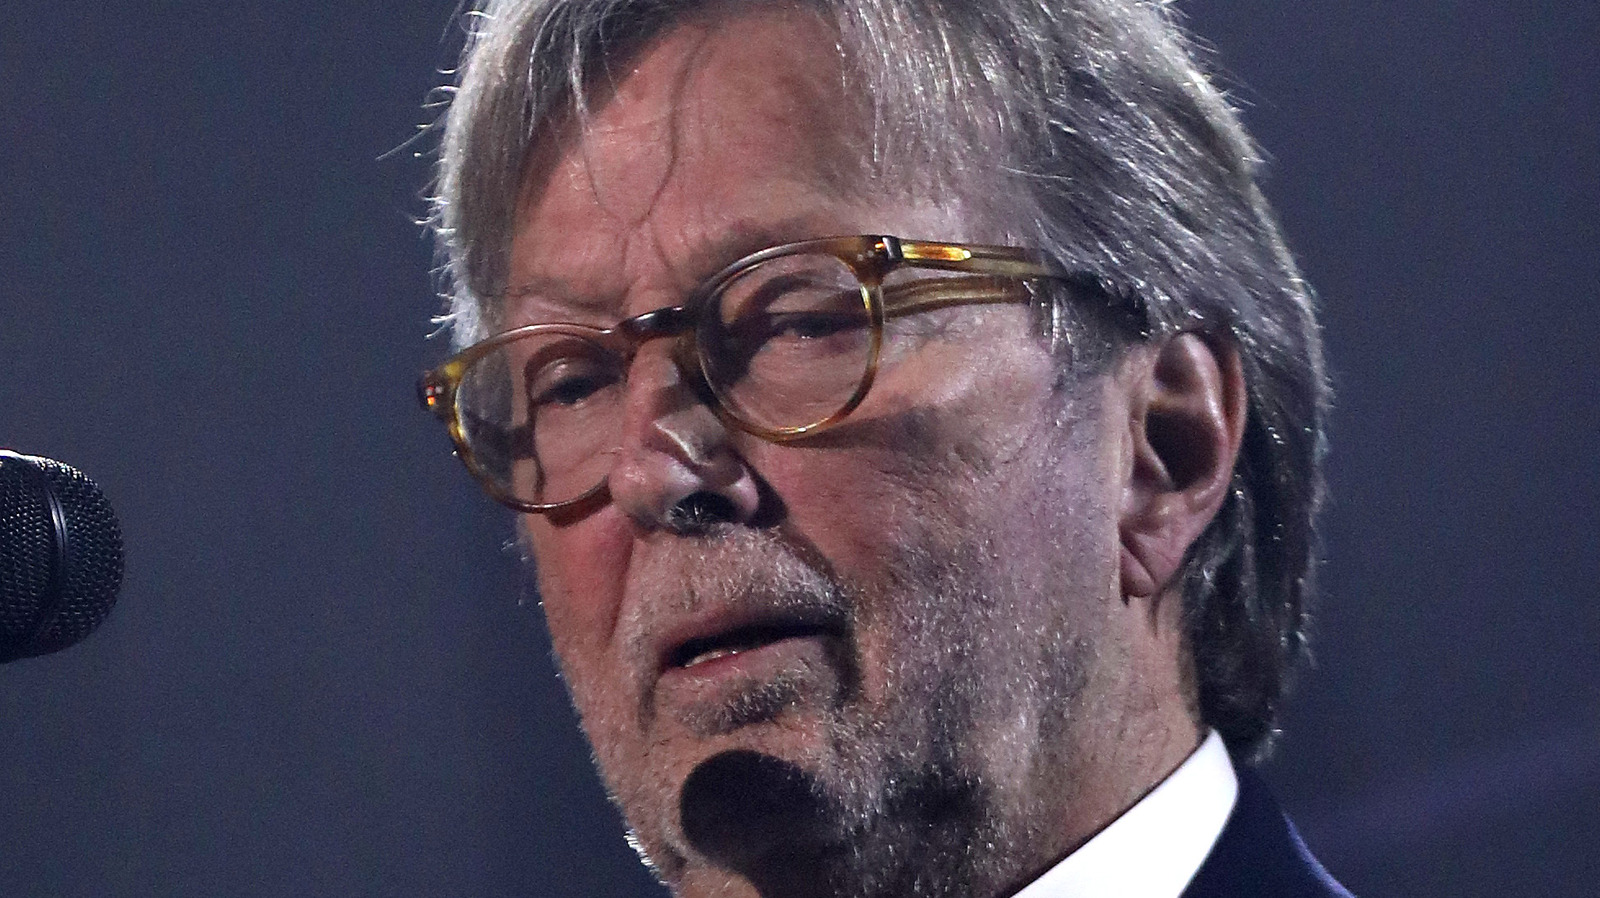 Story Behind 'Tears In Heaven' By Eric Clapton Is Heartbreaking